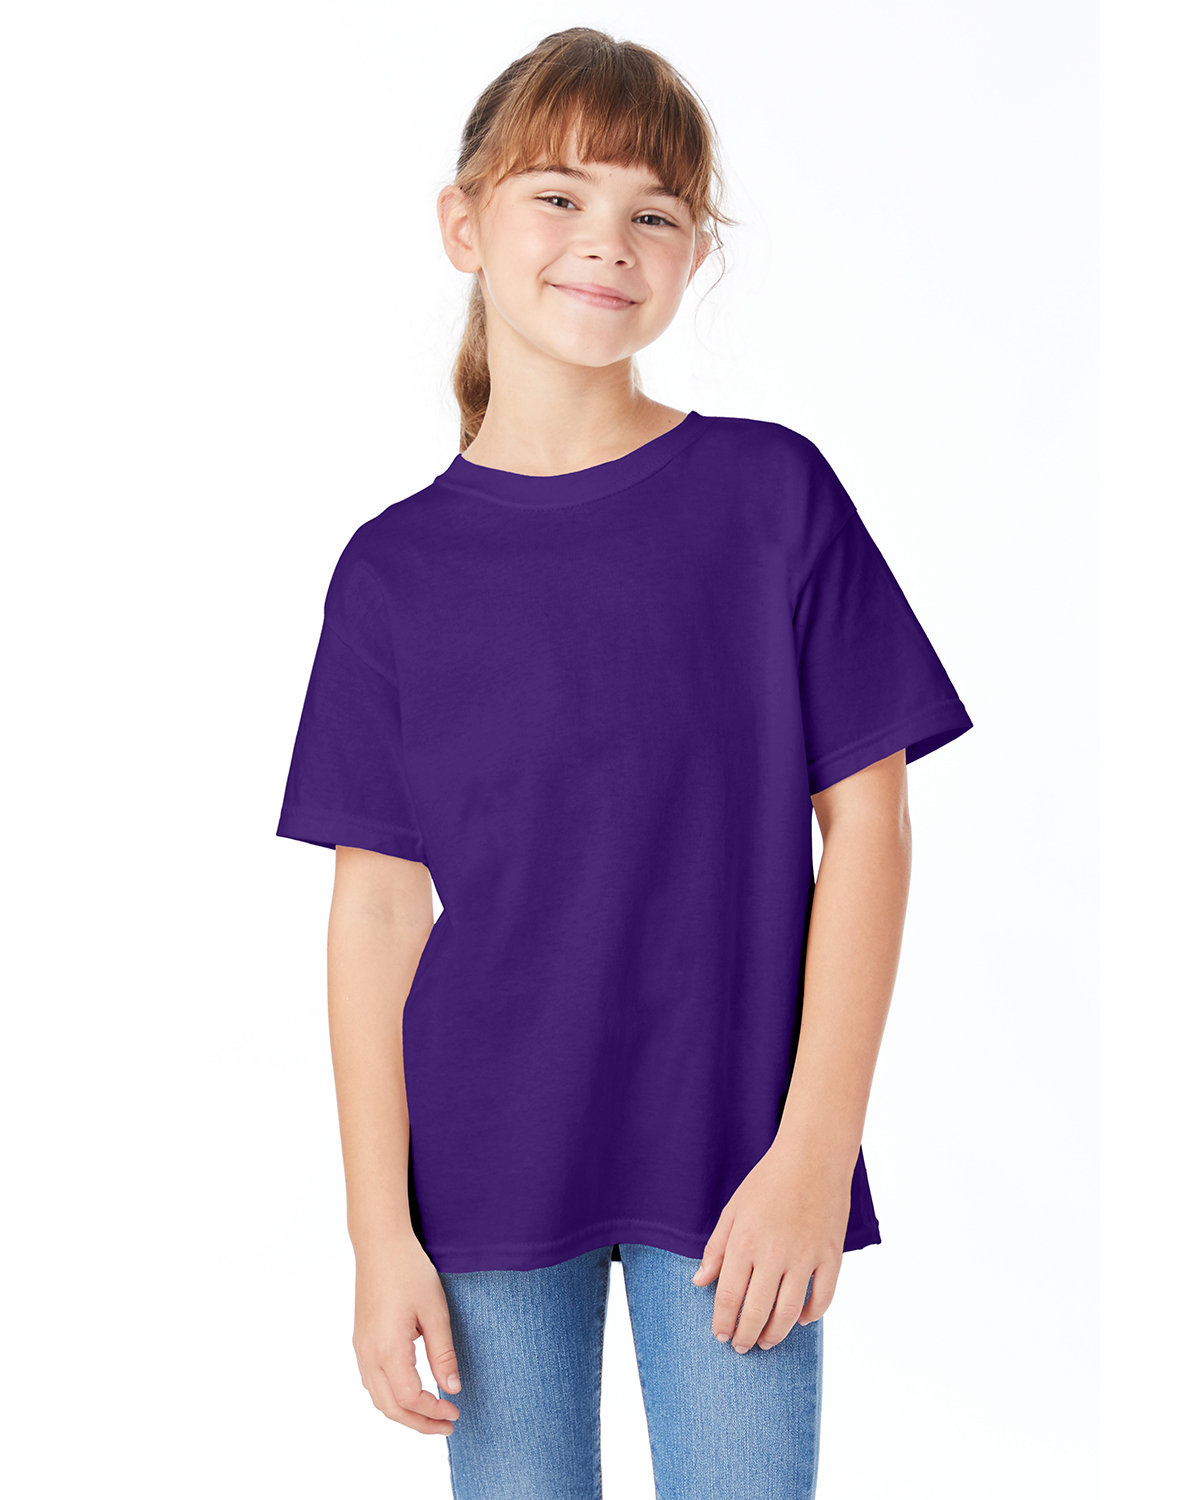 5.2 ShirtSpace | Hanes Comfortsoft® Cotton T-Shirt 5480 oz., Youth |